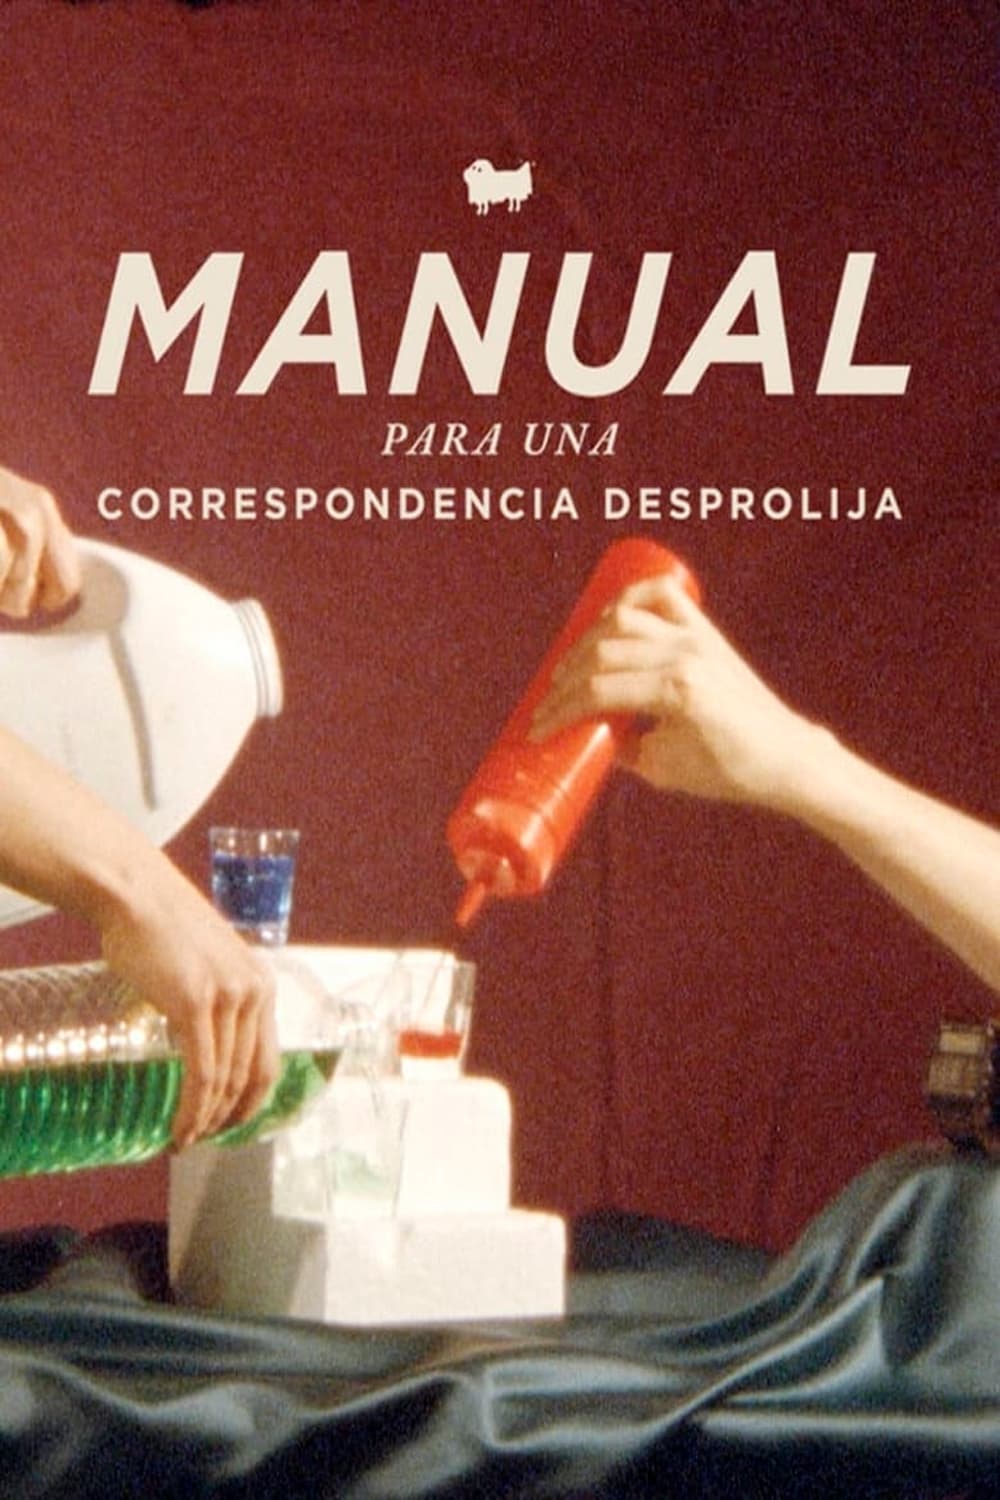 Manual for undity correspondance